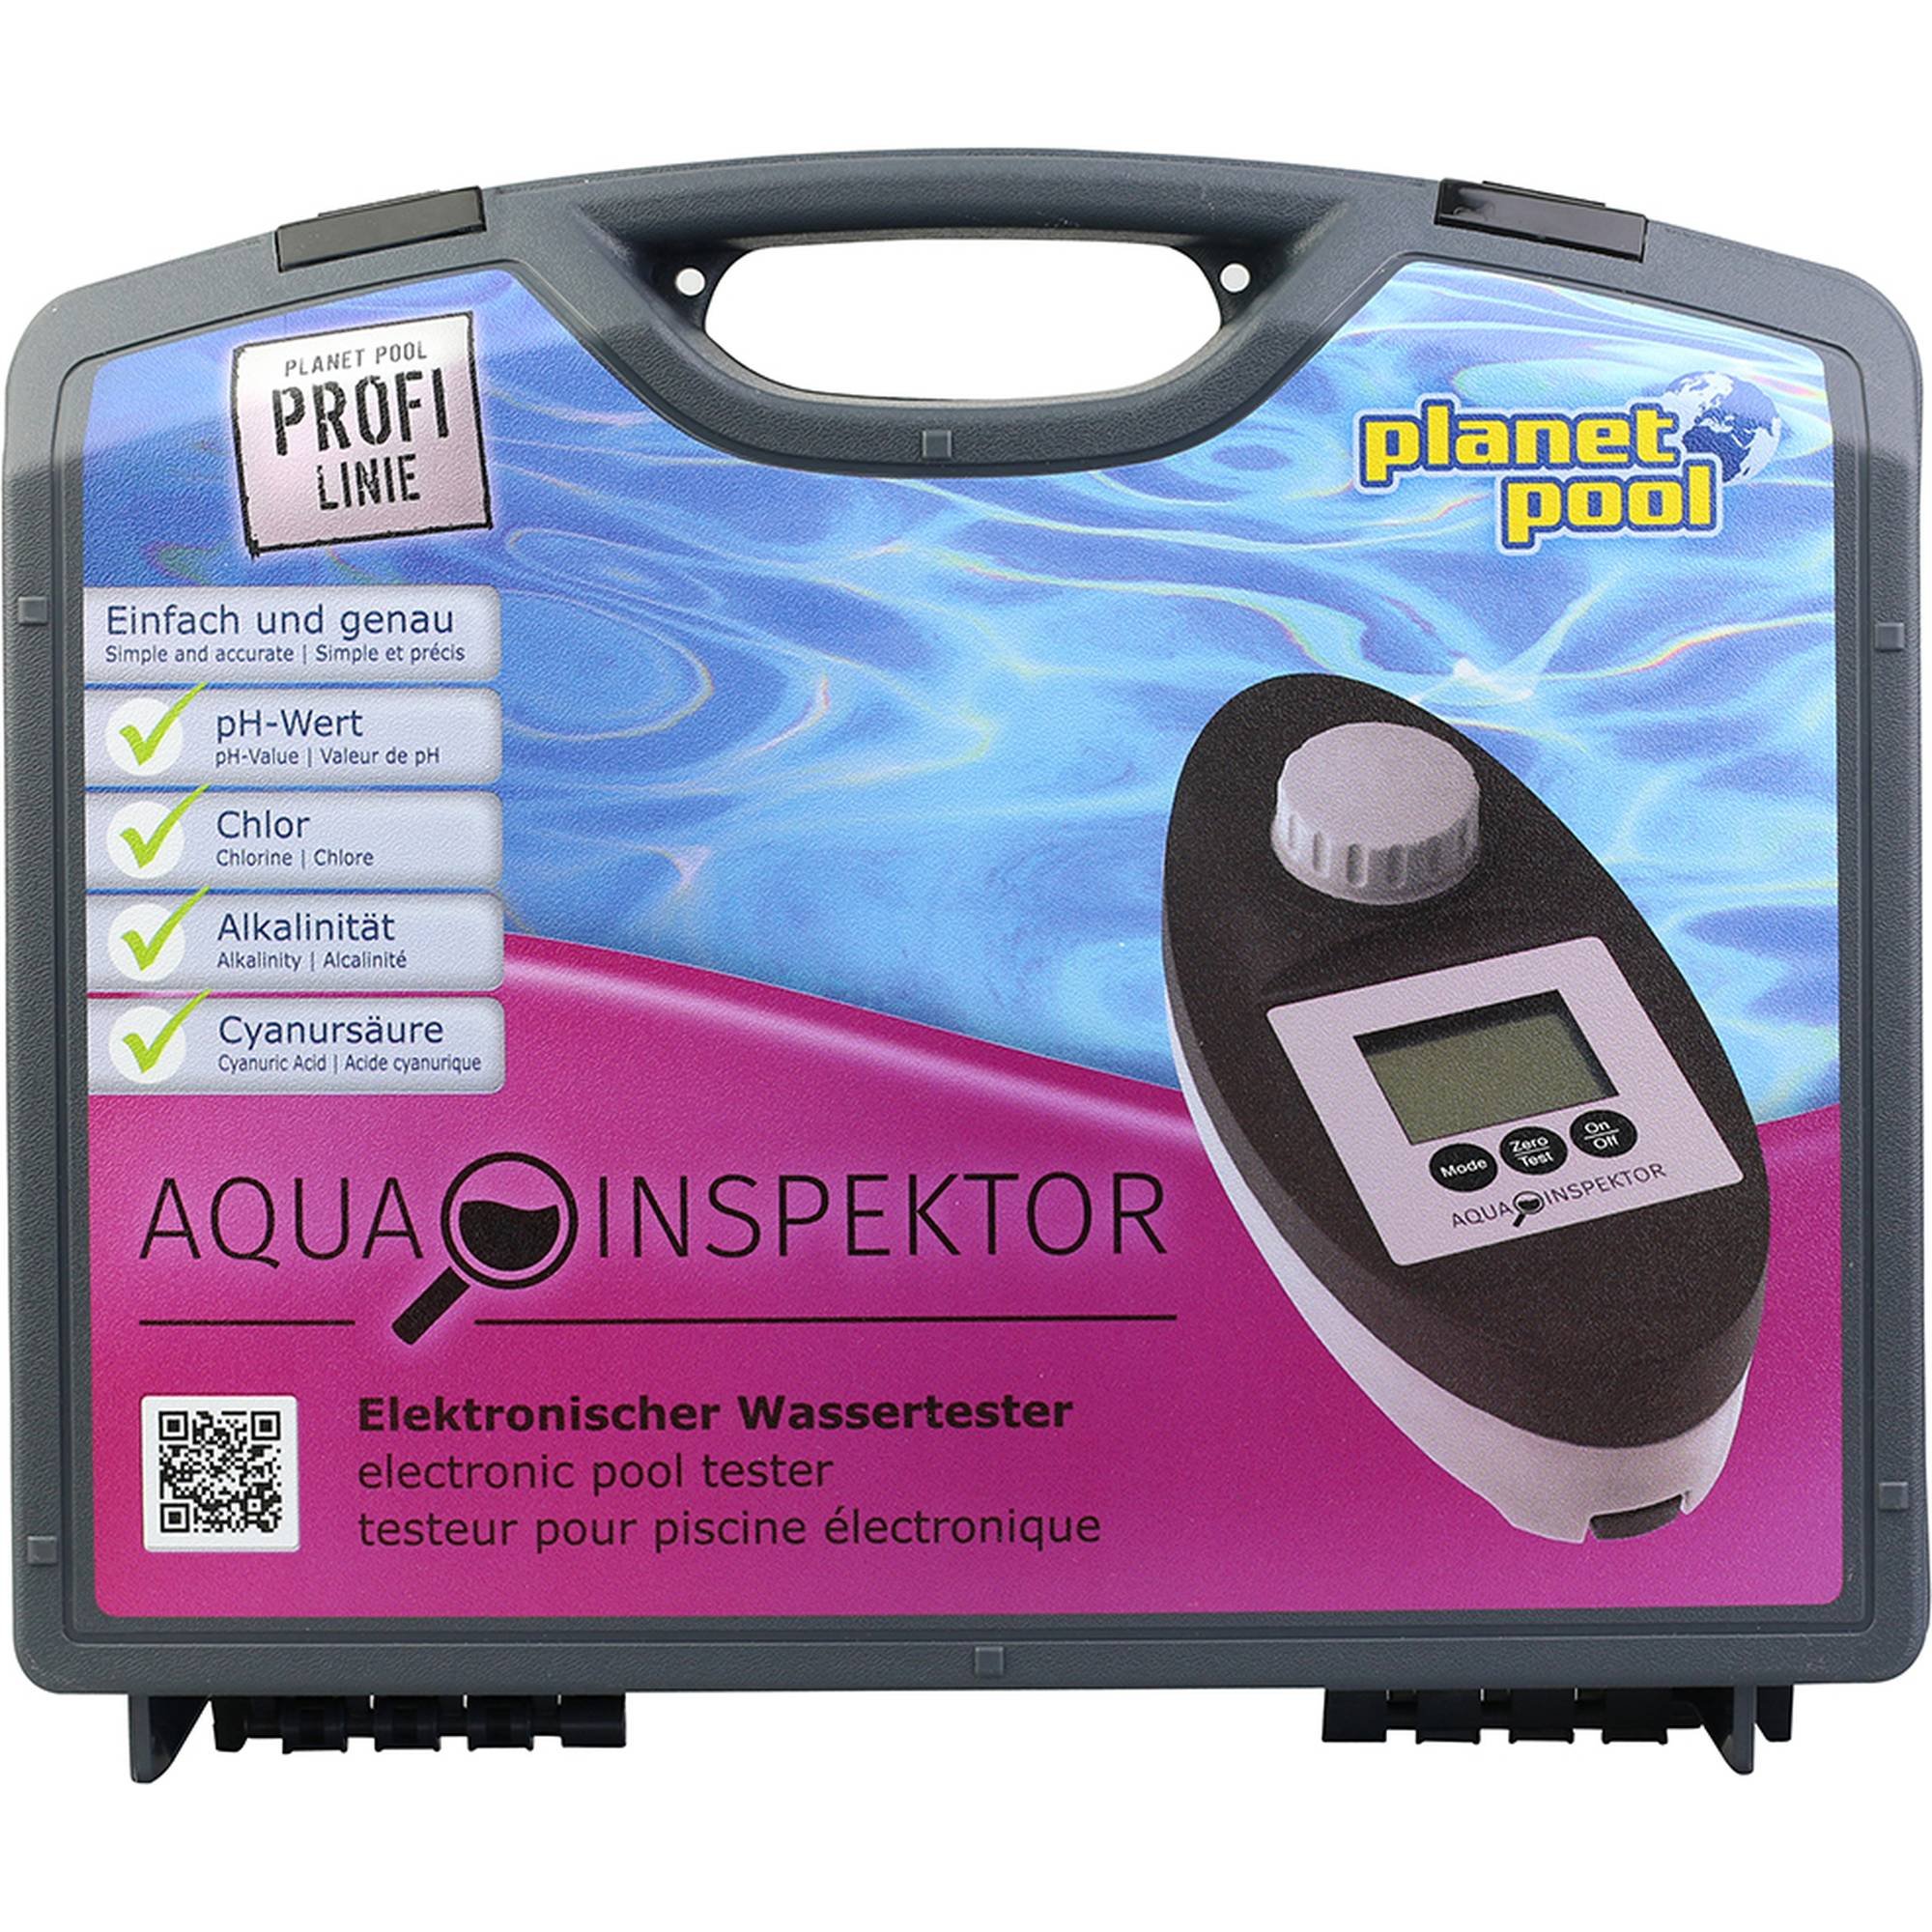 Elektronisches Profi-Messgerät (Aqua Inspektor), Chlor/pH, im Planet Pool Koffer